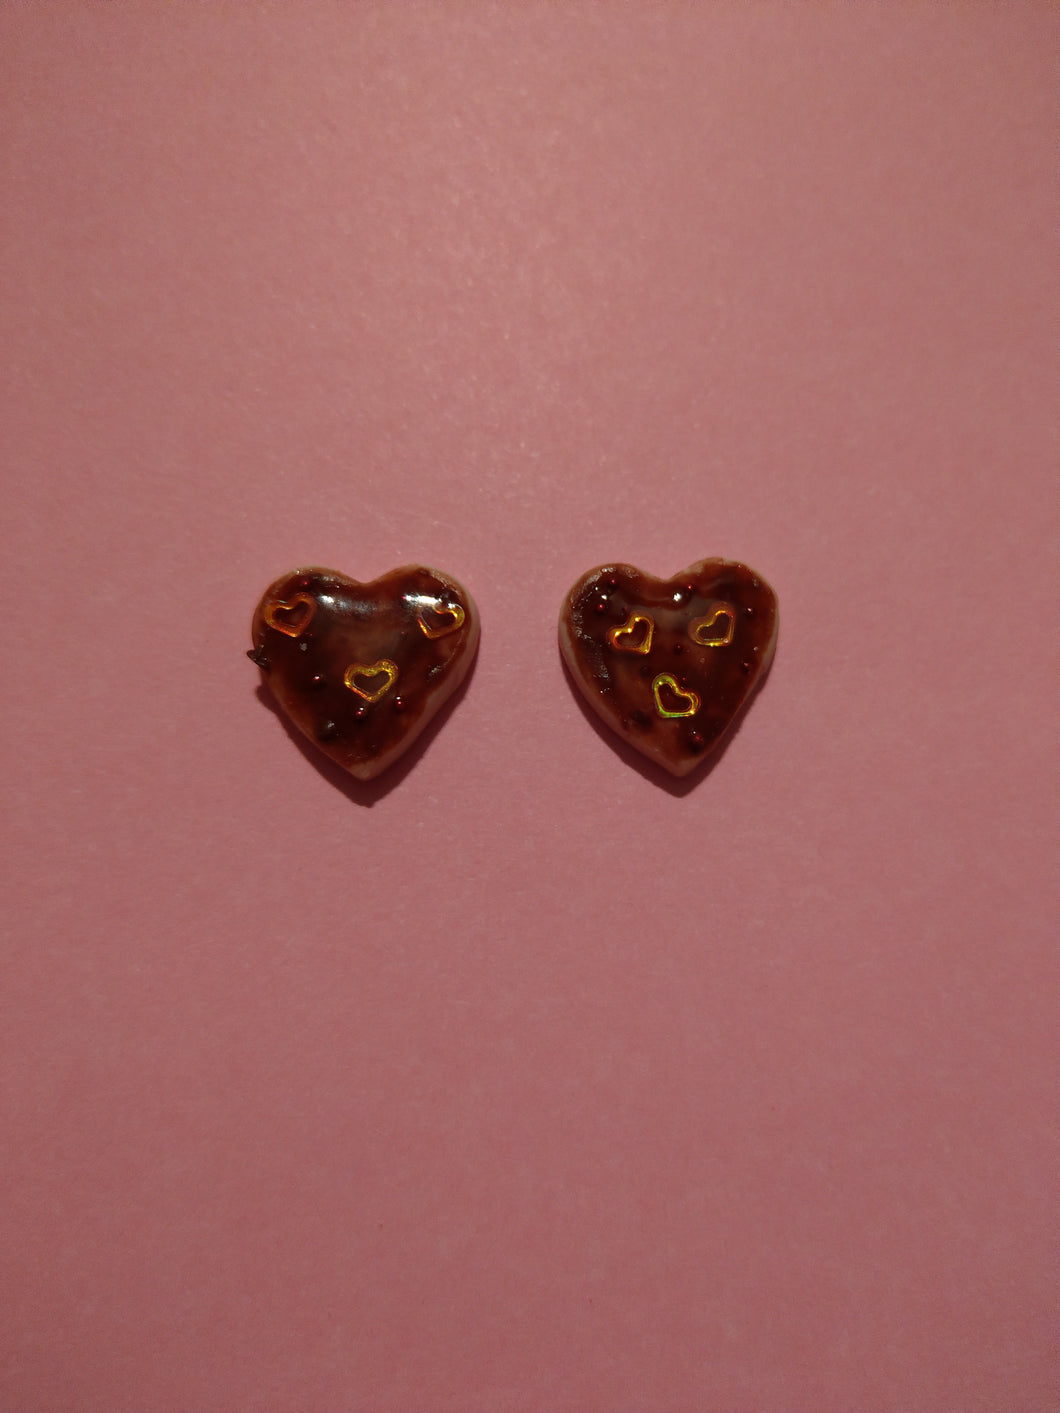 Chocolate Heart Cookie Earrings